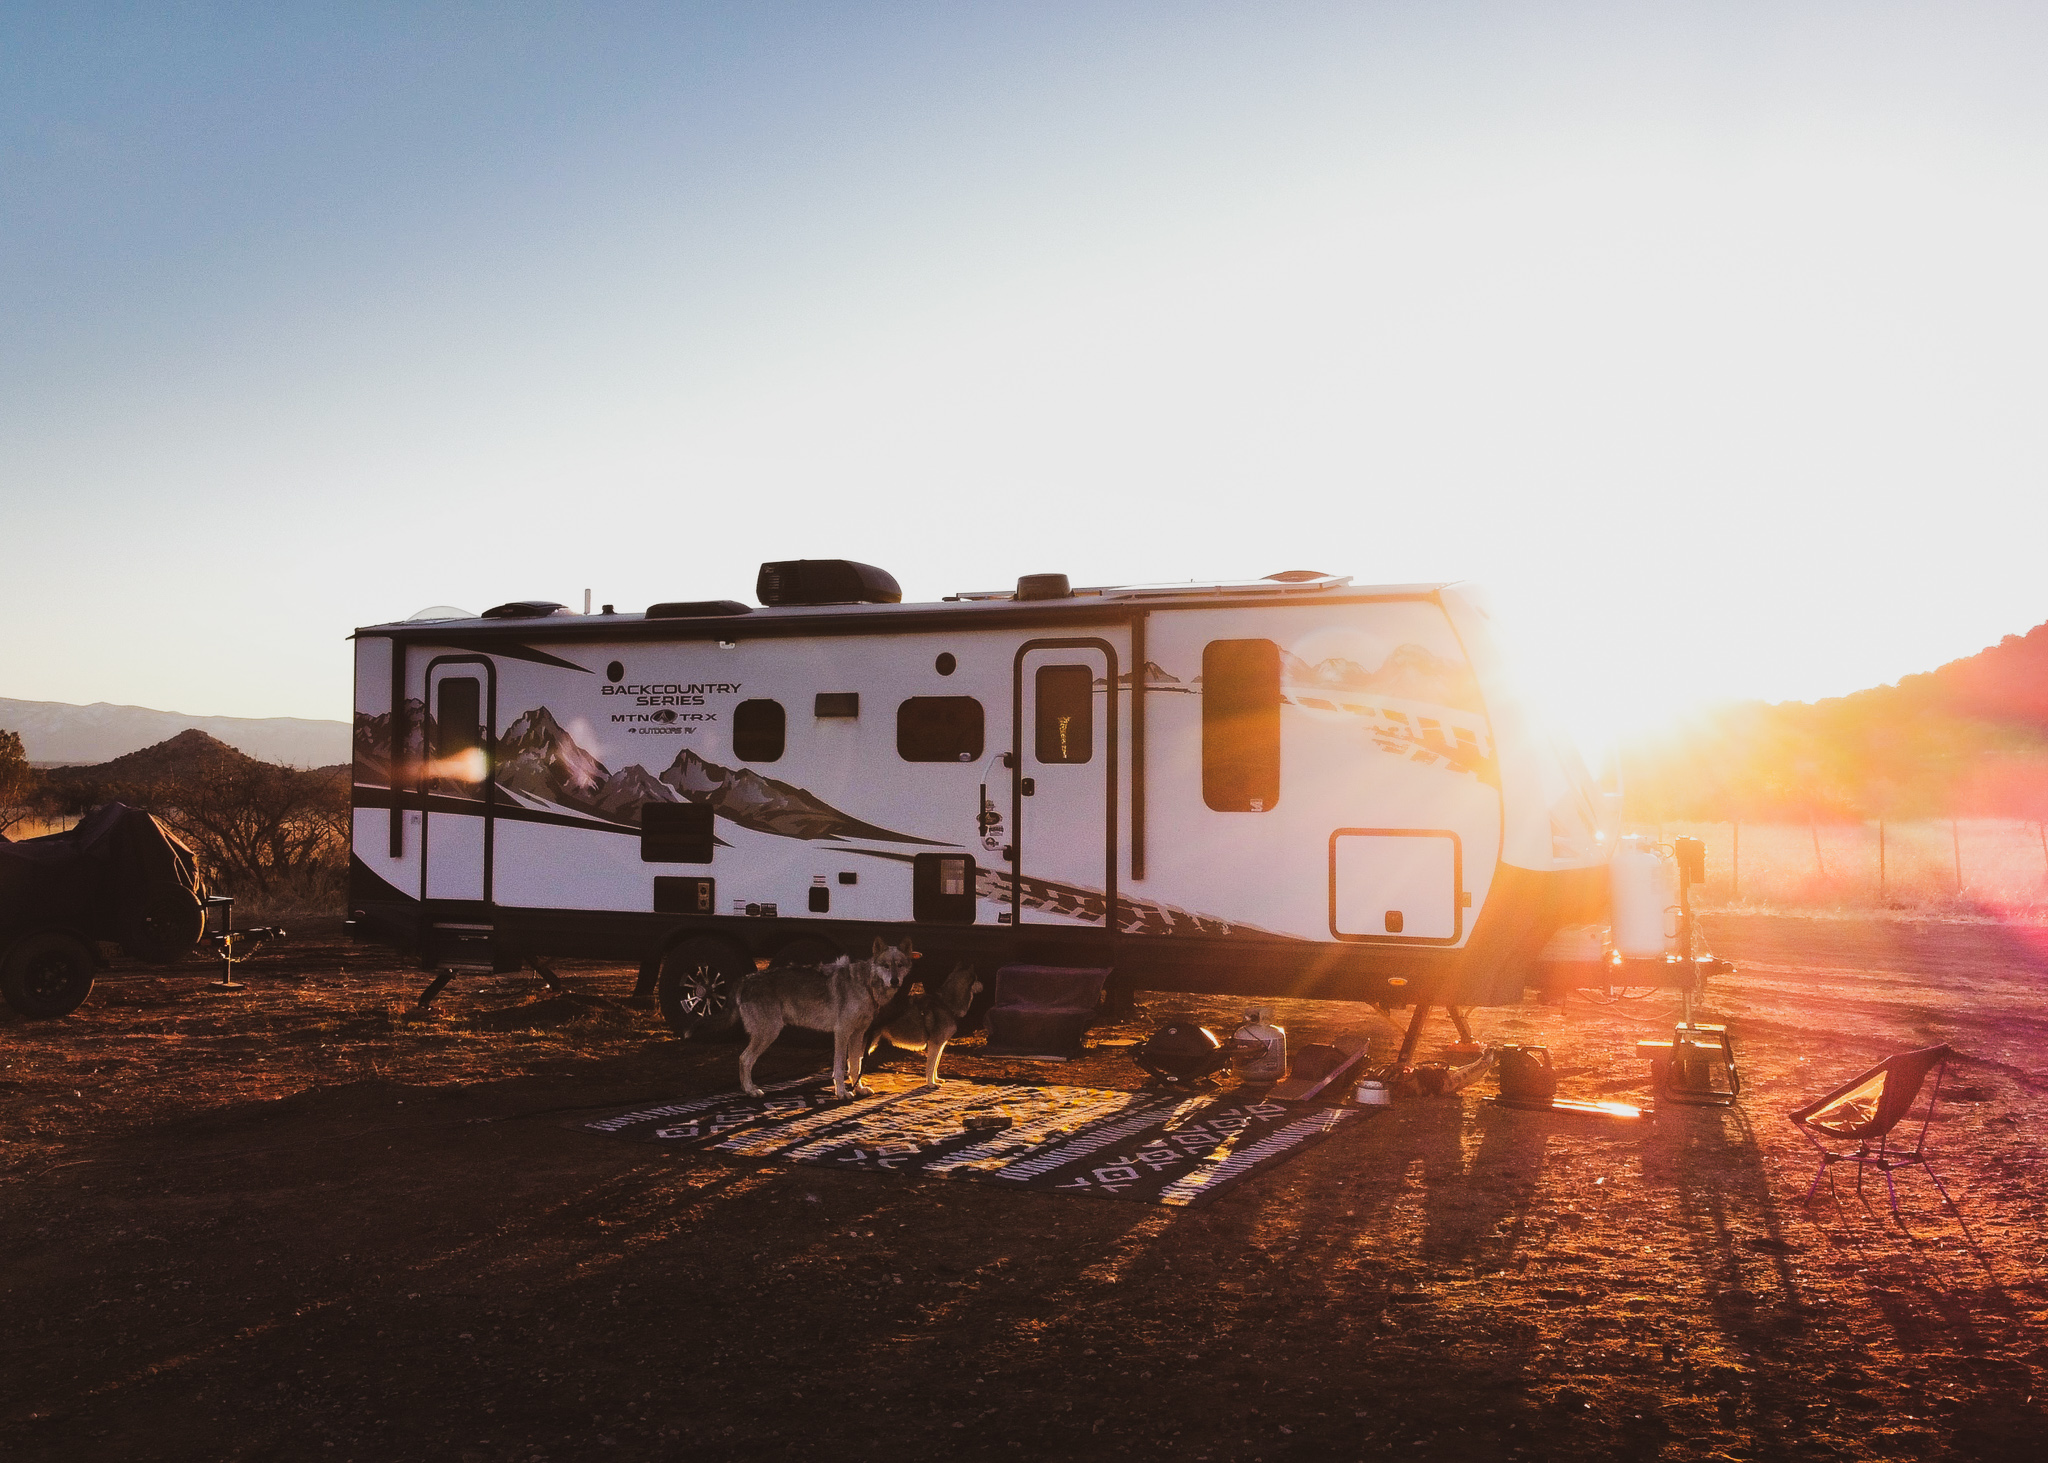 Free RV Camping